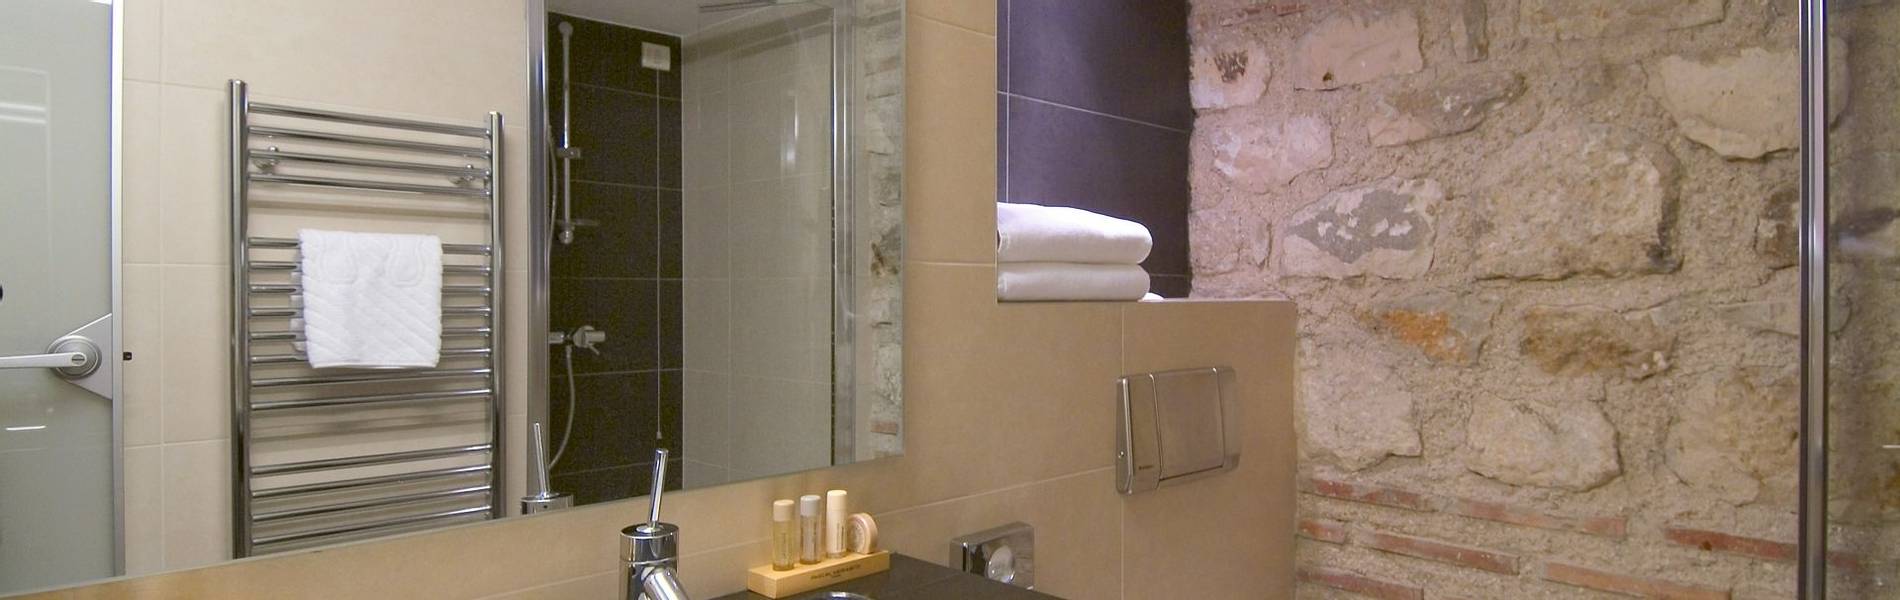 hotel vestibul palace split standard double room bathroom 2.jpg